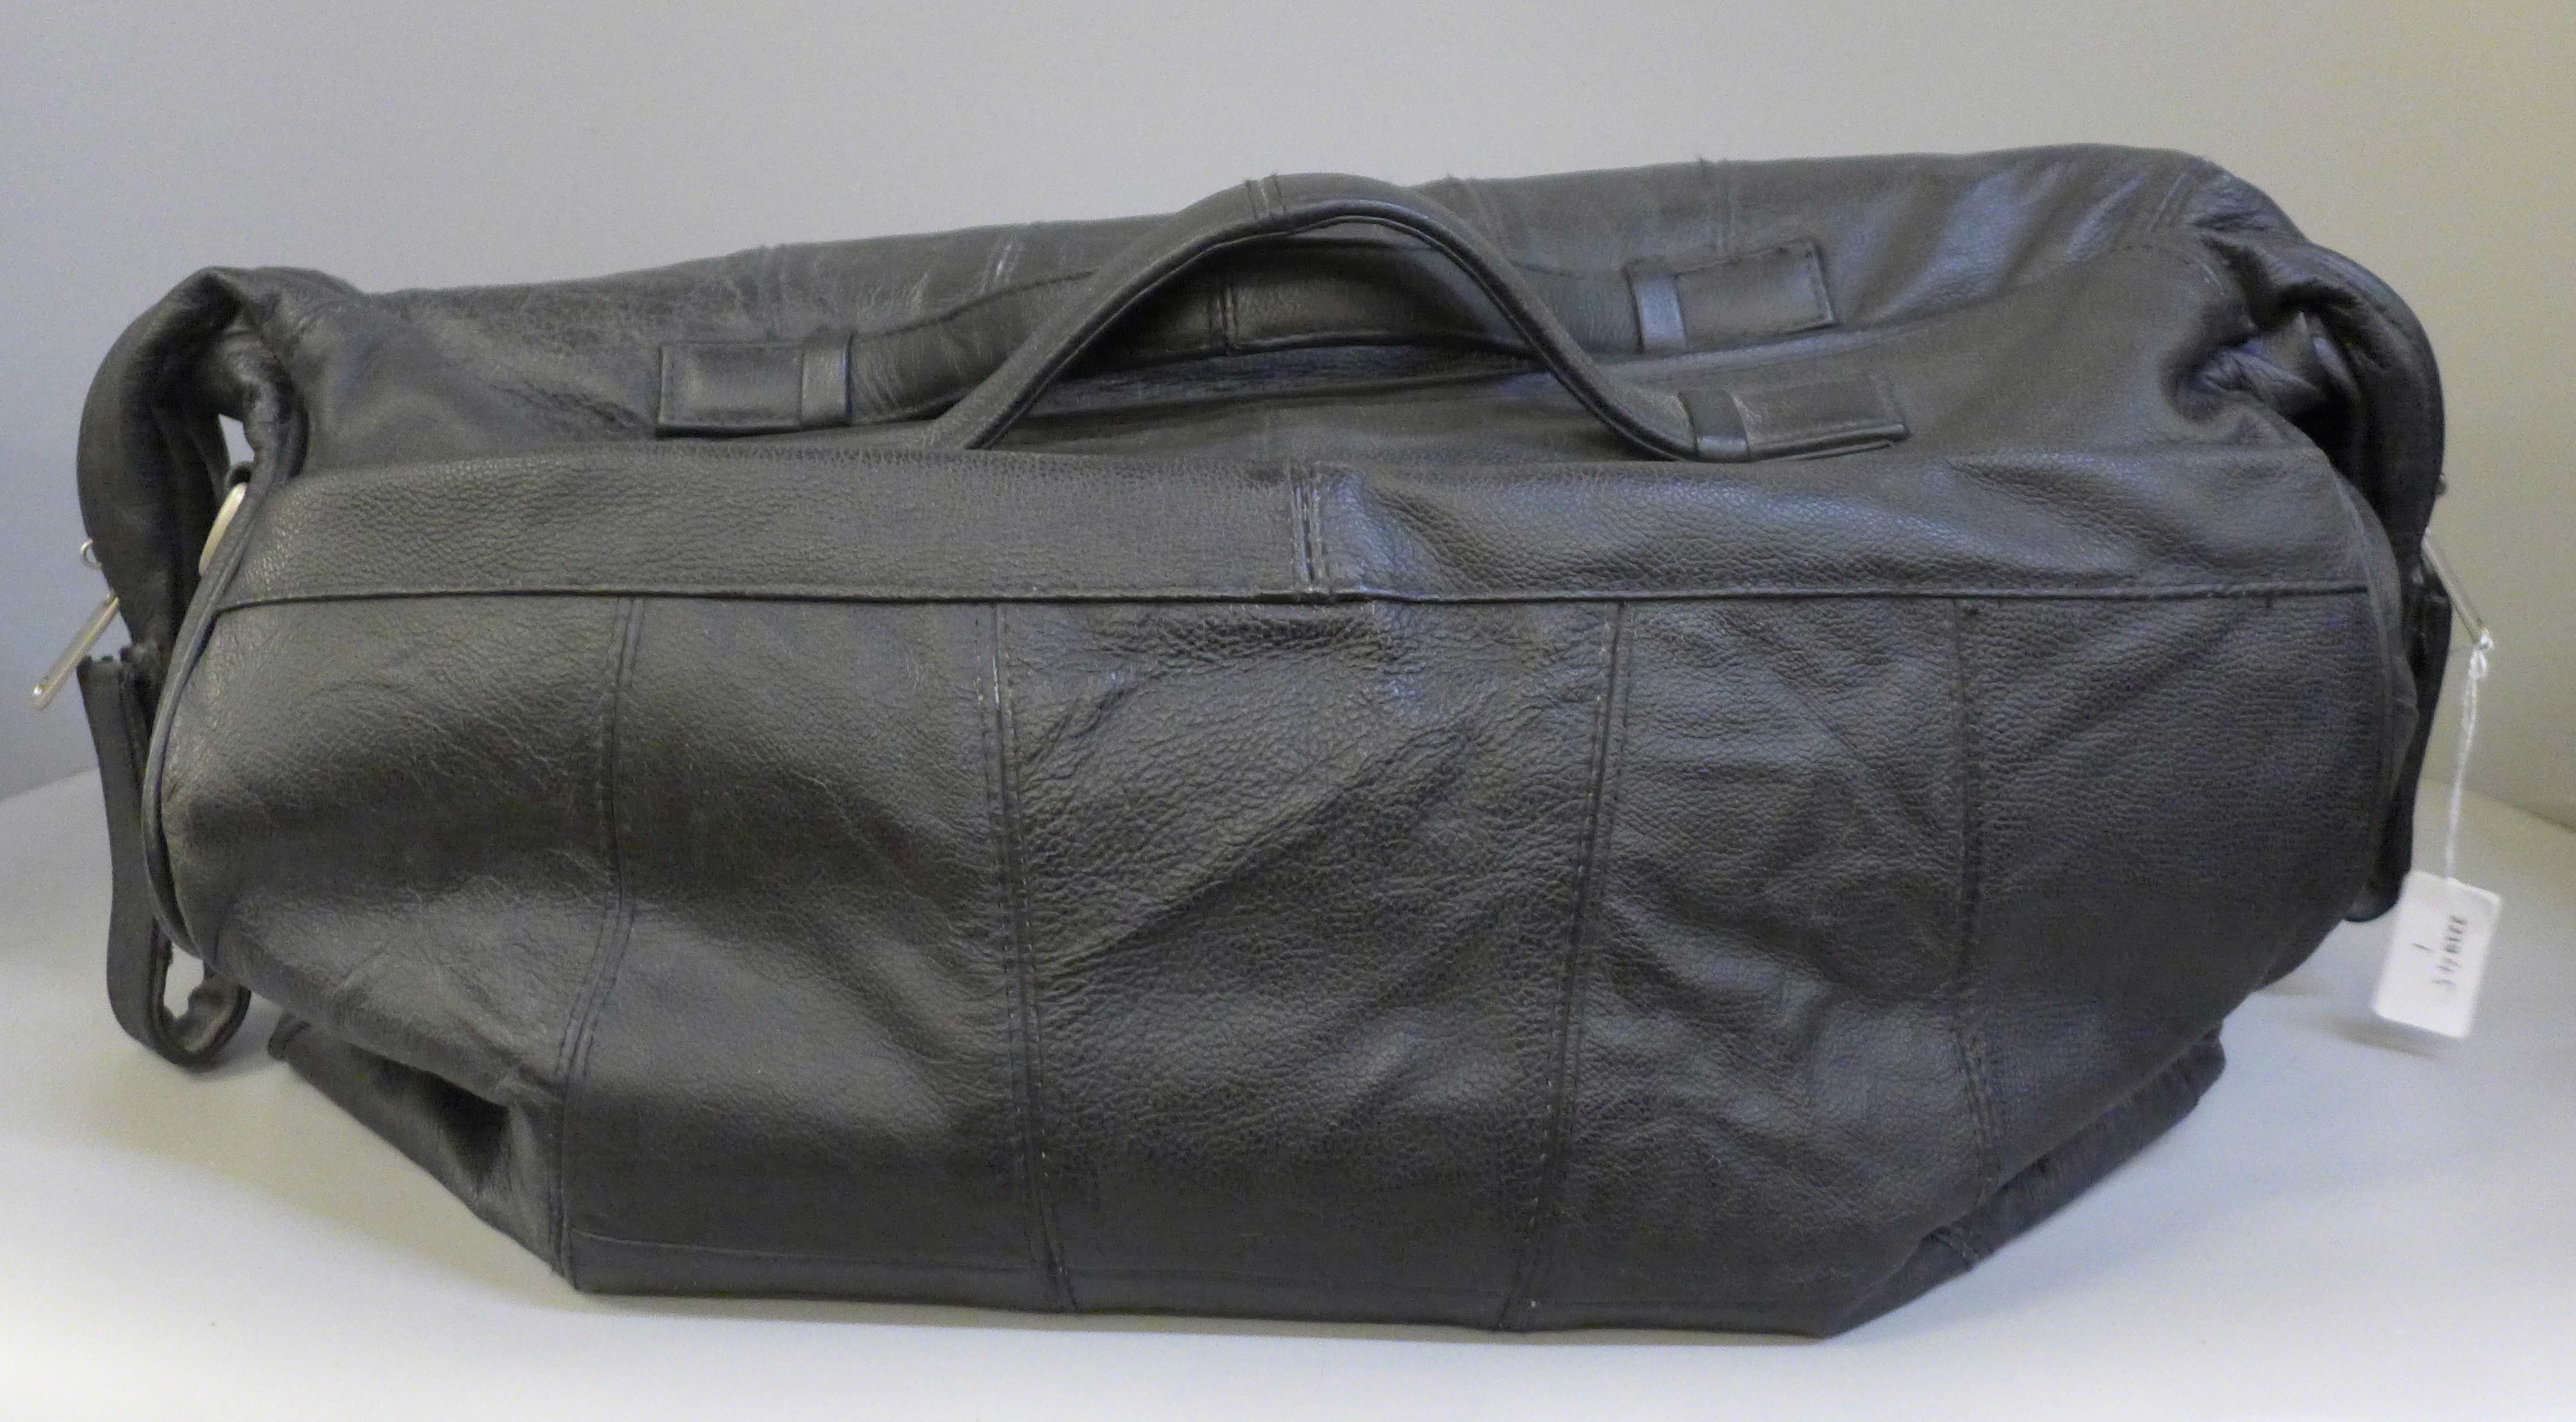 A black leather weekend bag